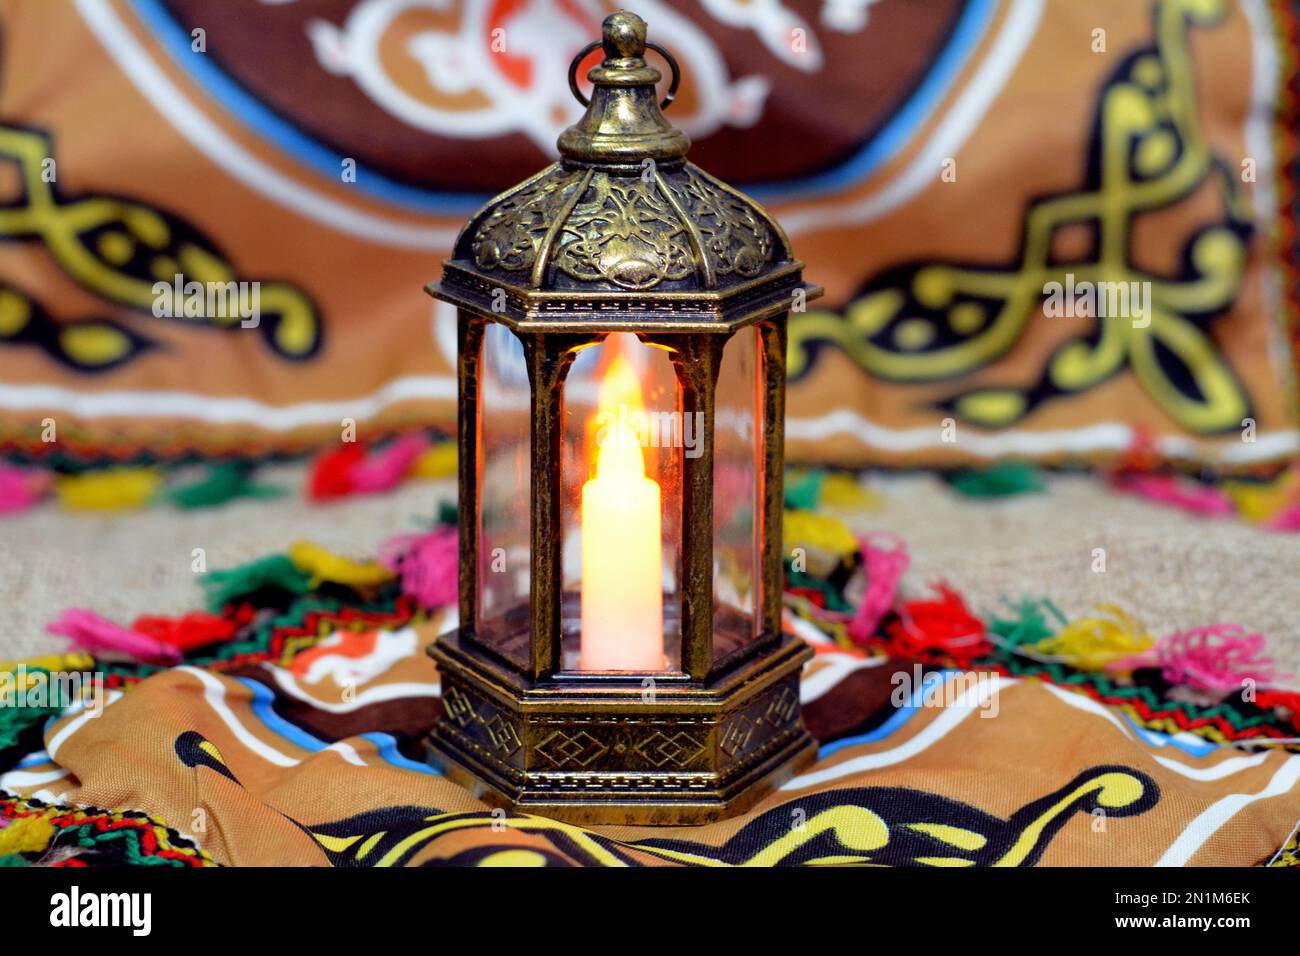 https://c8.alamy.com/comp/2N1M6EK/ramadan-lantern-lamp-or-fanous-ramadan-on-a-ramadan-background-as-a-festive-celebration-of-the-islamic-fasting-days-in-arabian-islamic-countries-reli-2N1M6EK.jpg